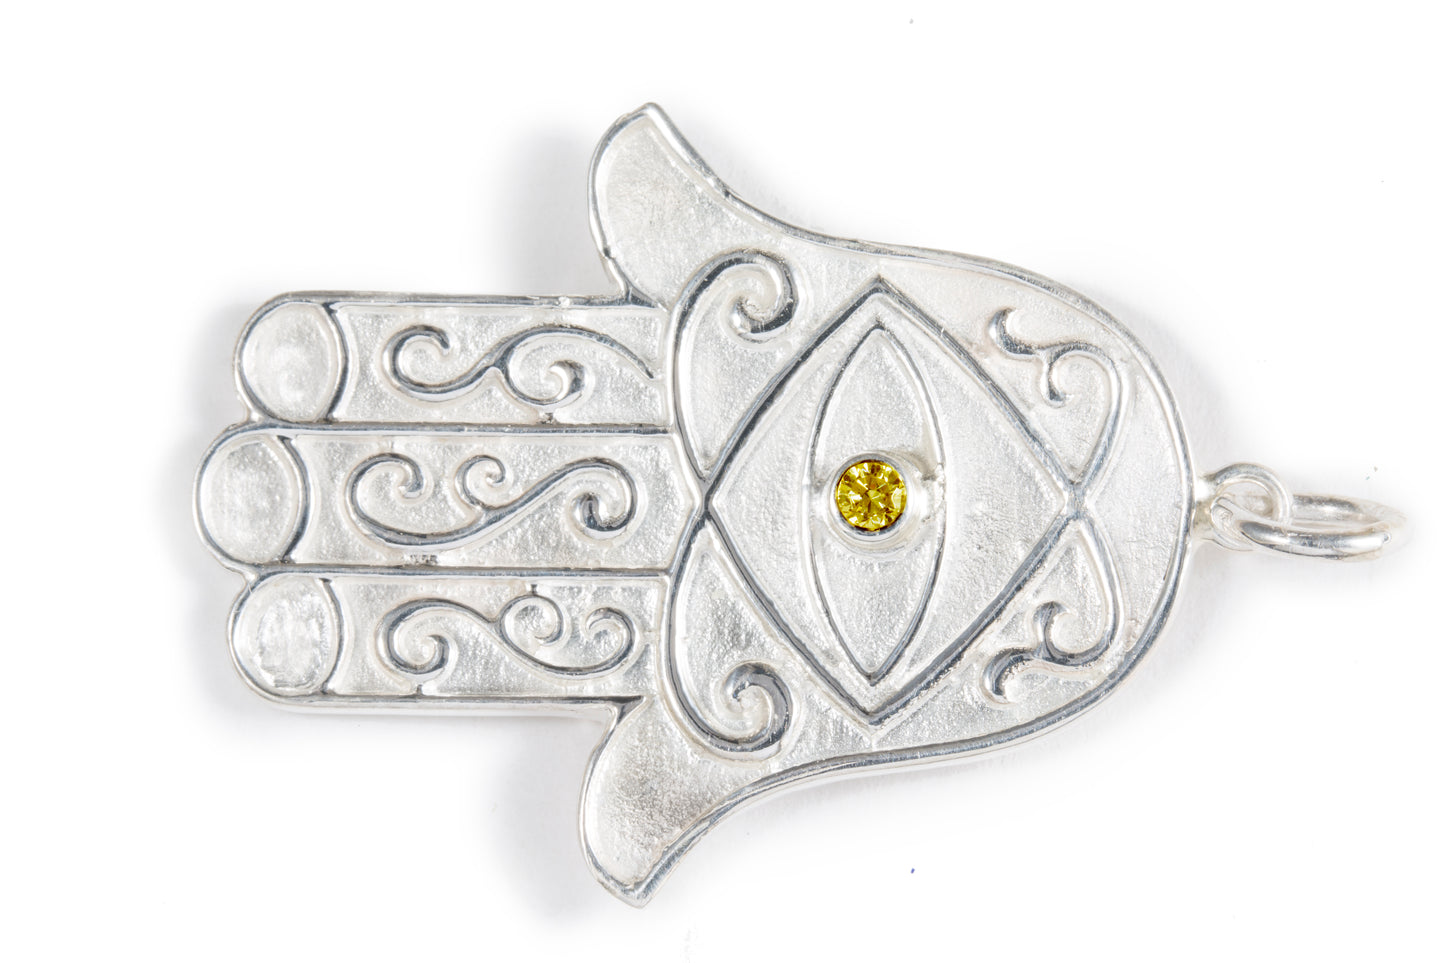 The Hamsa Hand Pendant with Birthstone